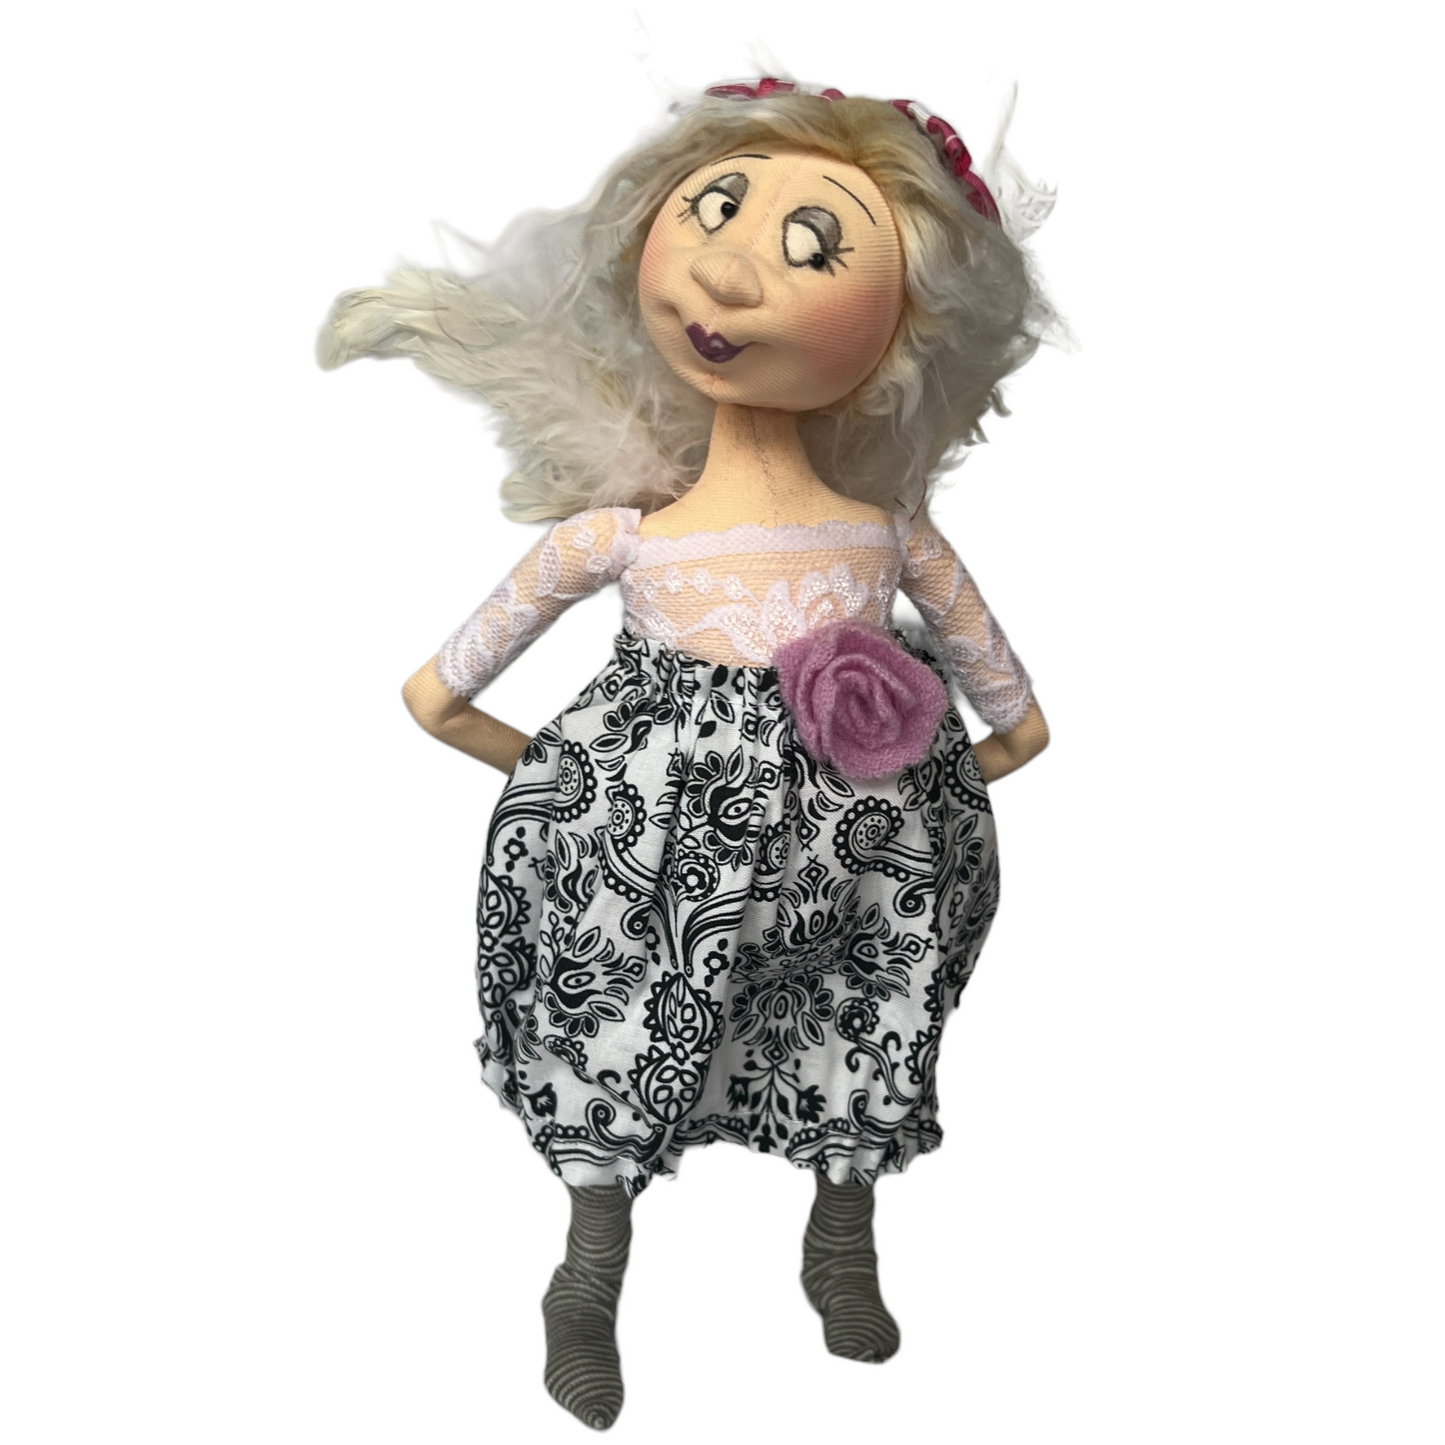 Tina, Sitting Standing Dolls  Splash Quilting Large / Paisley Dress  